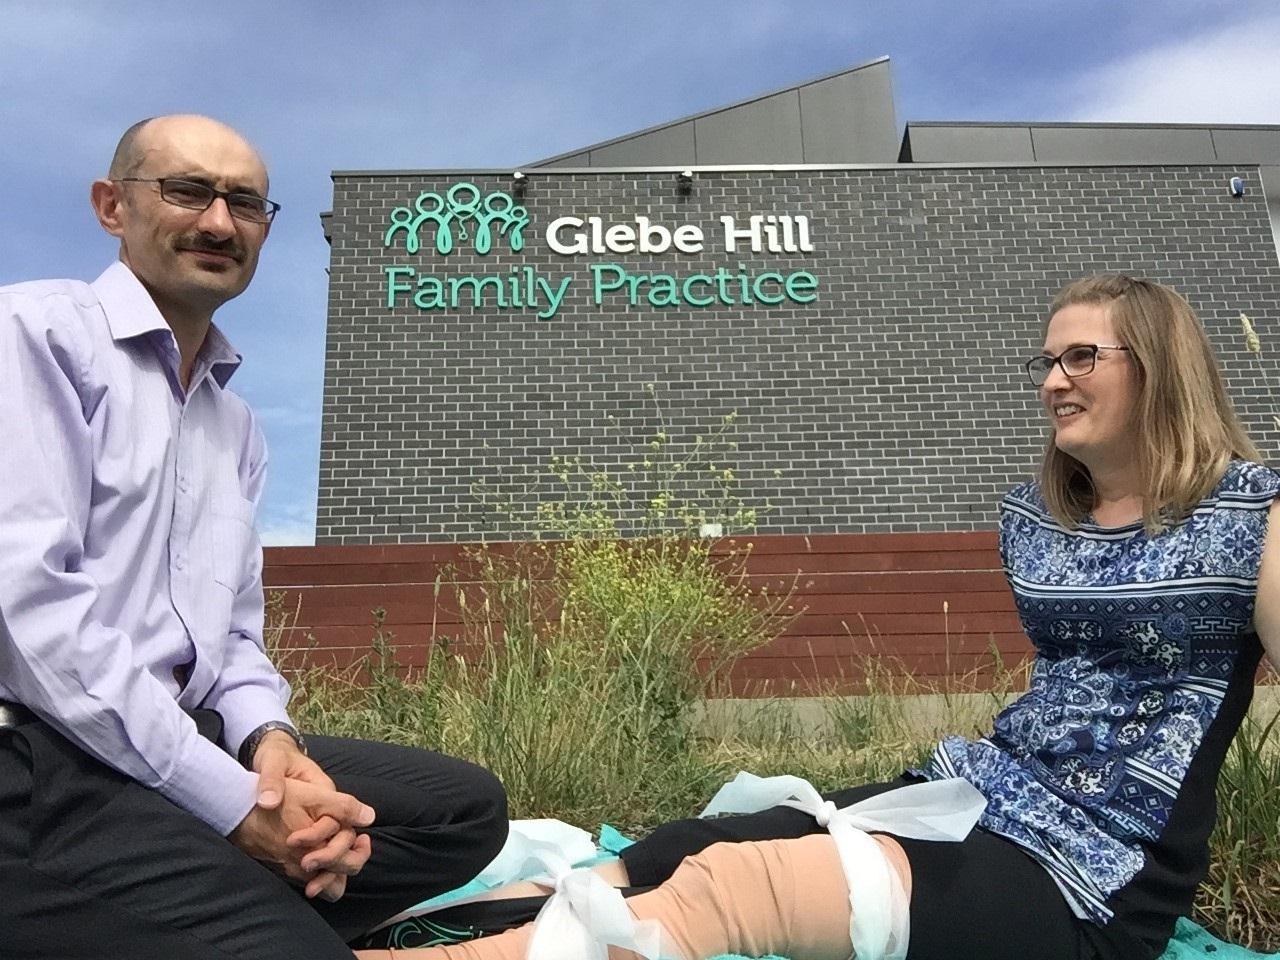 Glebe Hill Family Practice - Snake bite first aid